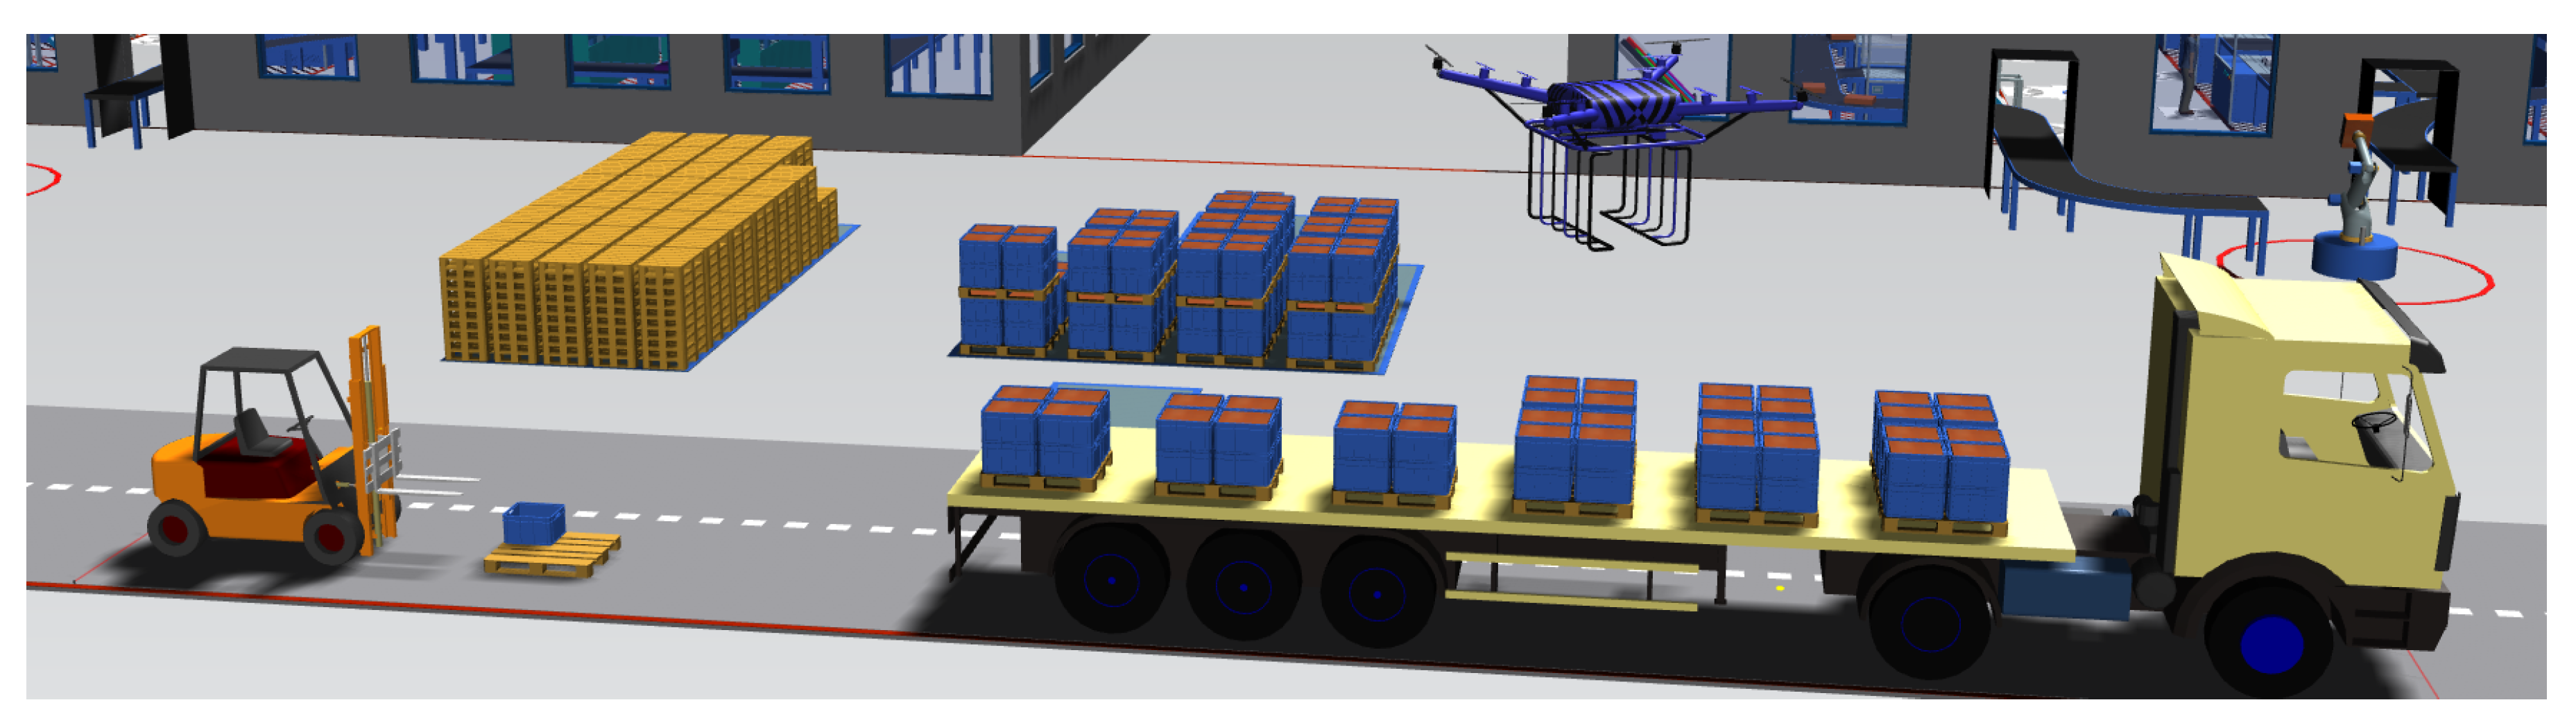 space colony air cargo transport simulator